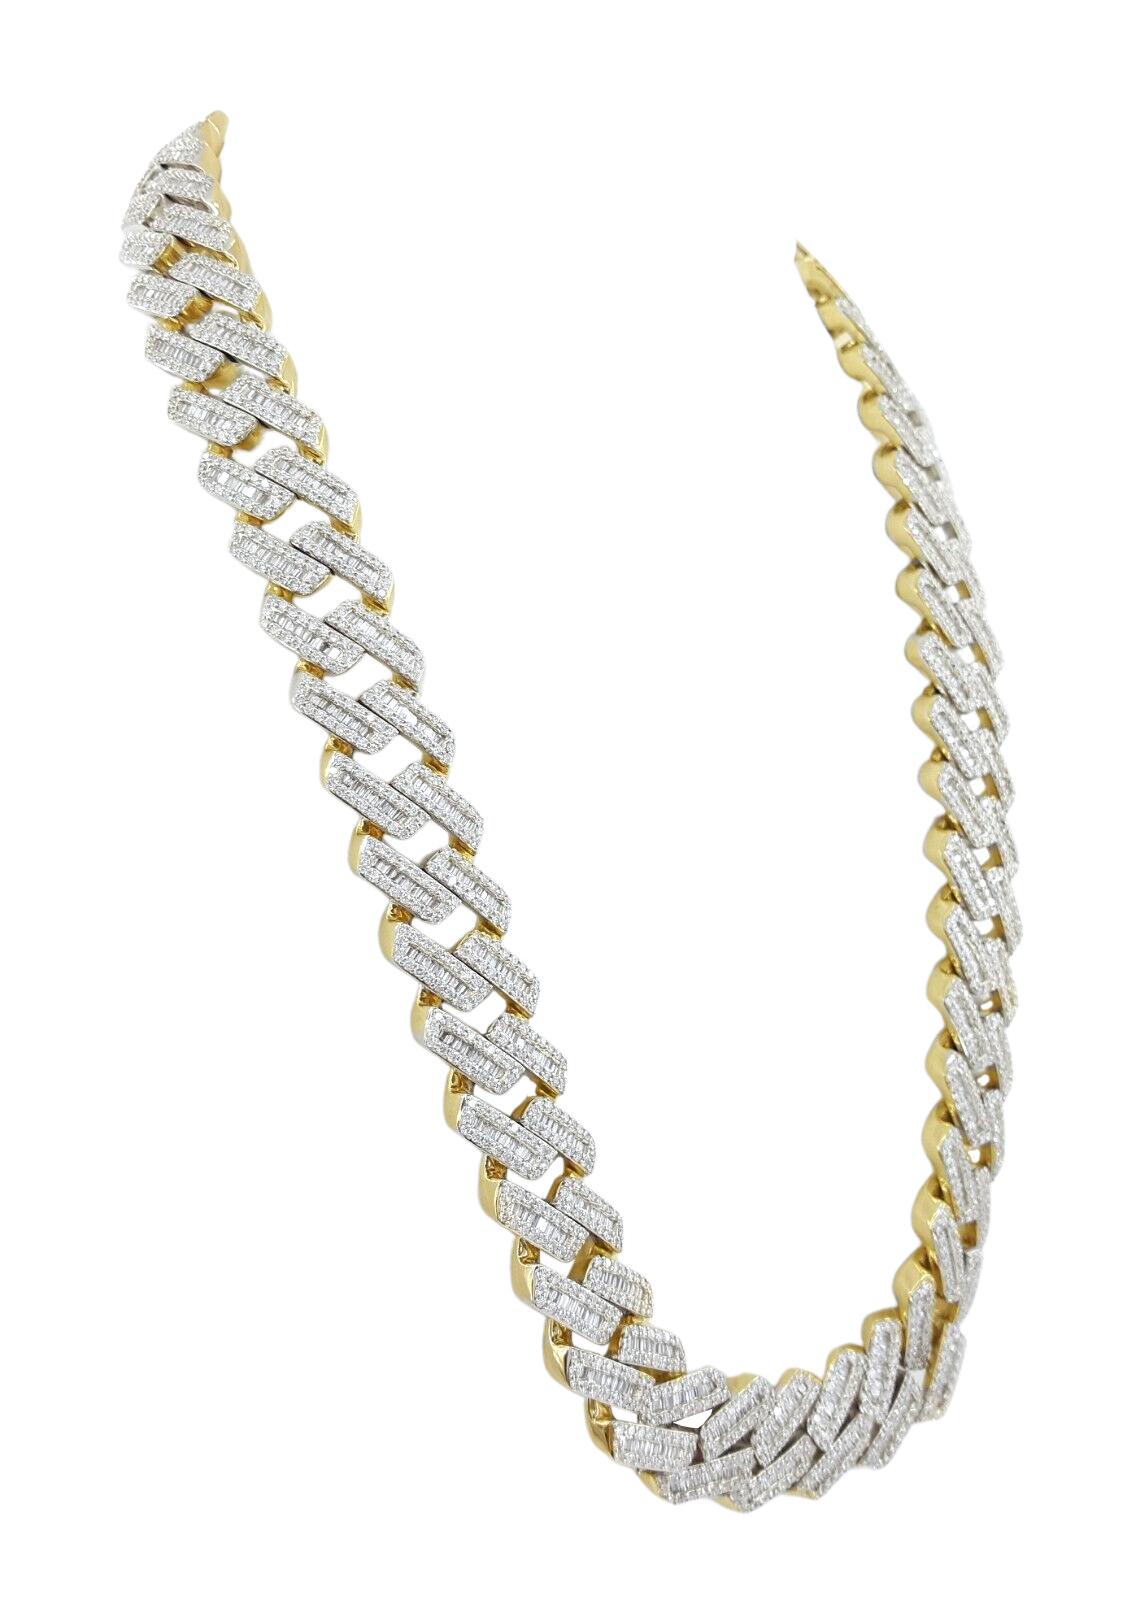 29.28 ct Total Weight Baguette & Round Brilliant Cut Diamonds Cuban Link Chain Necklace.
